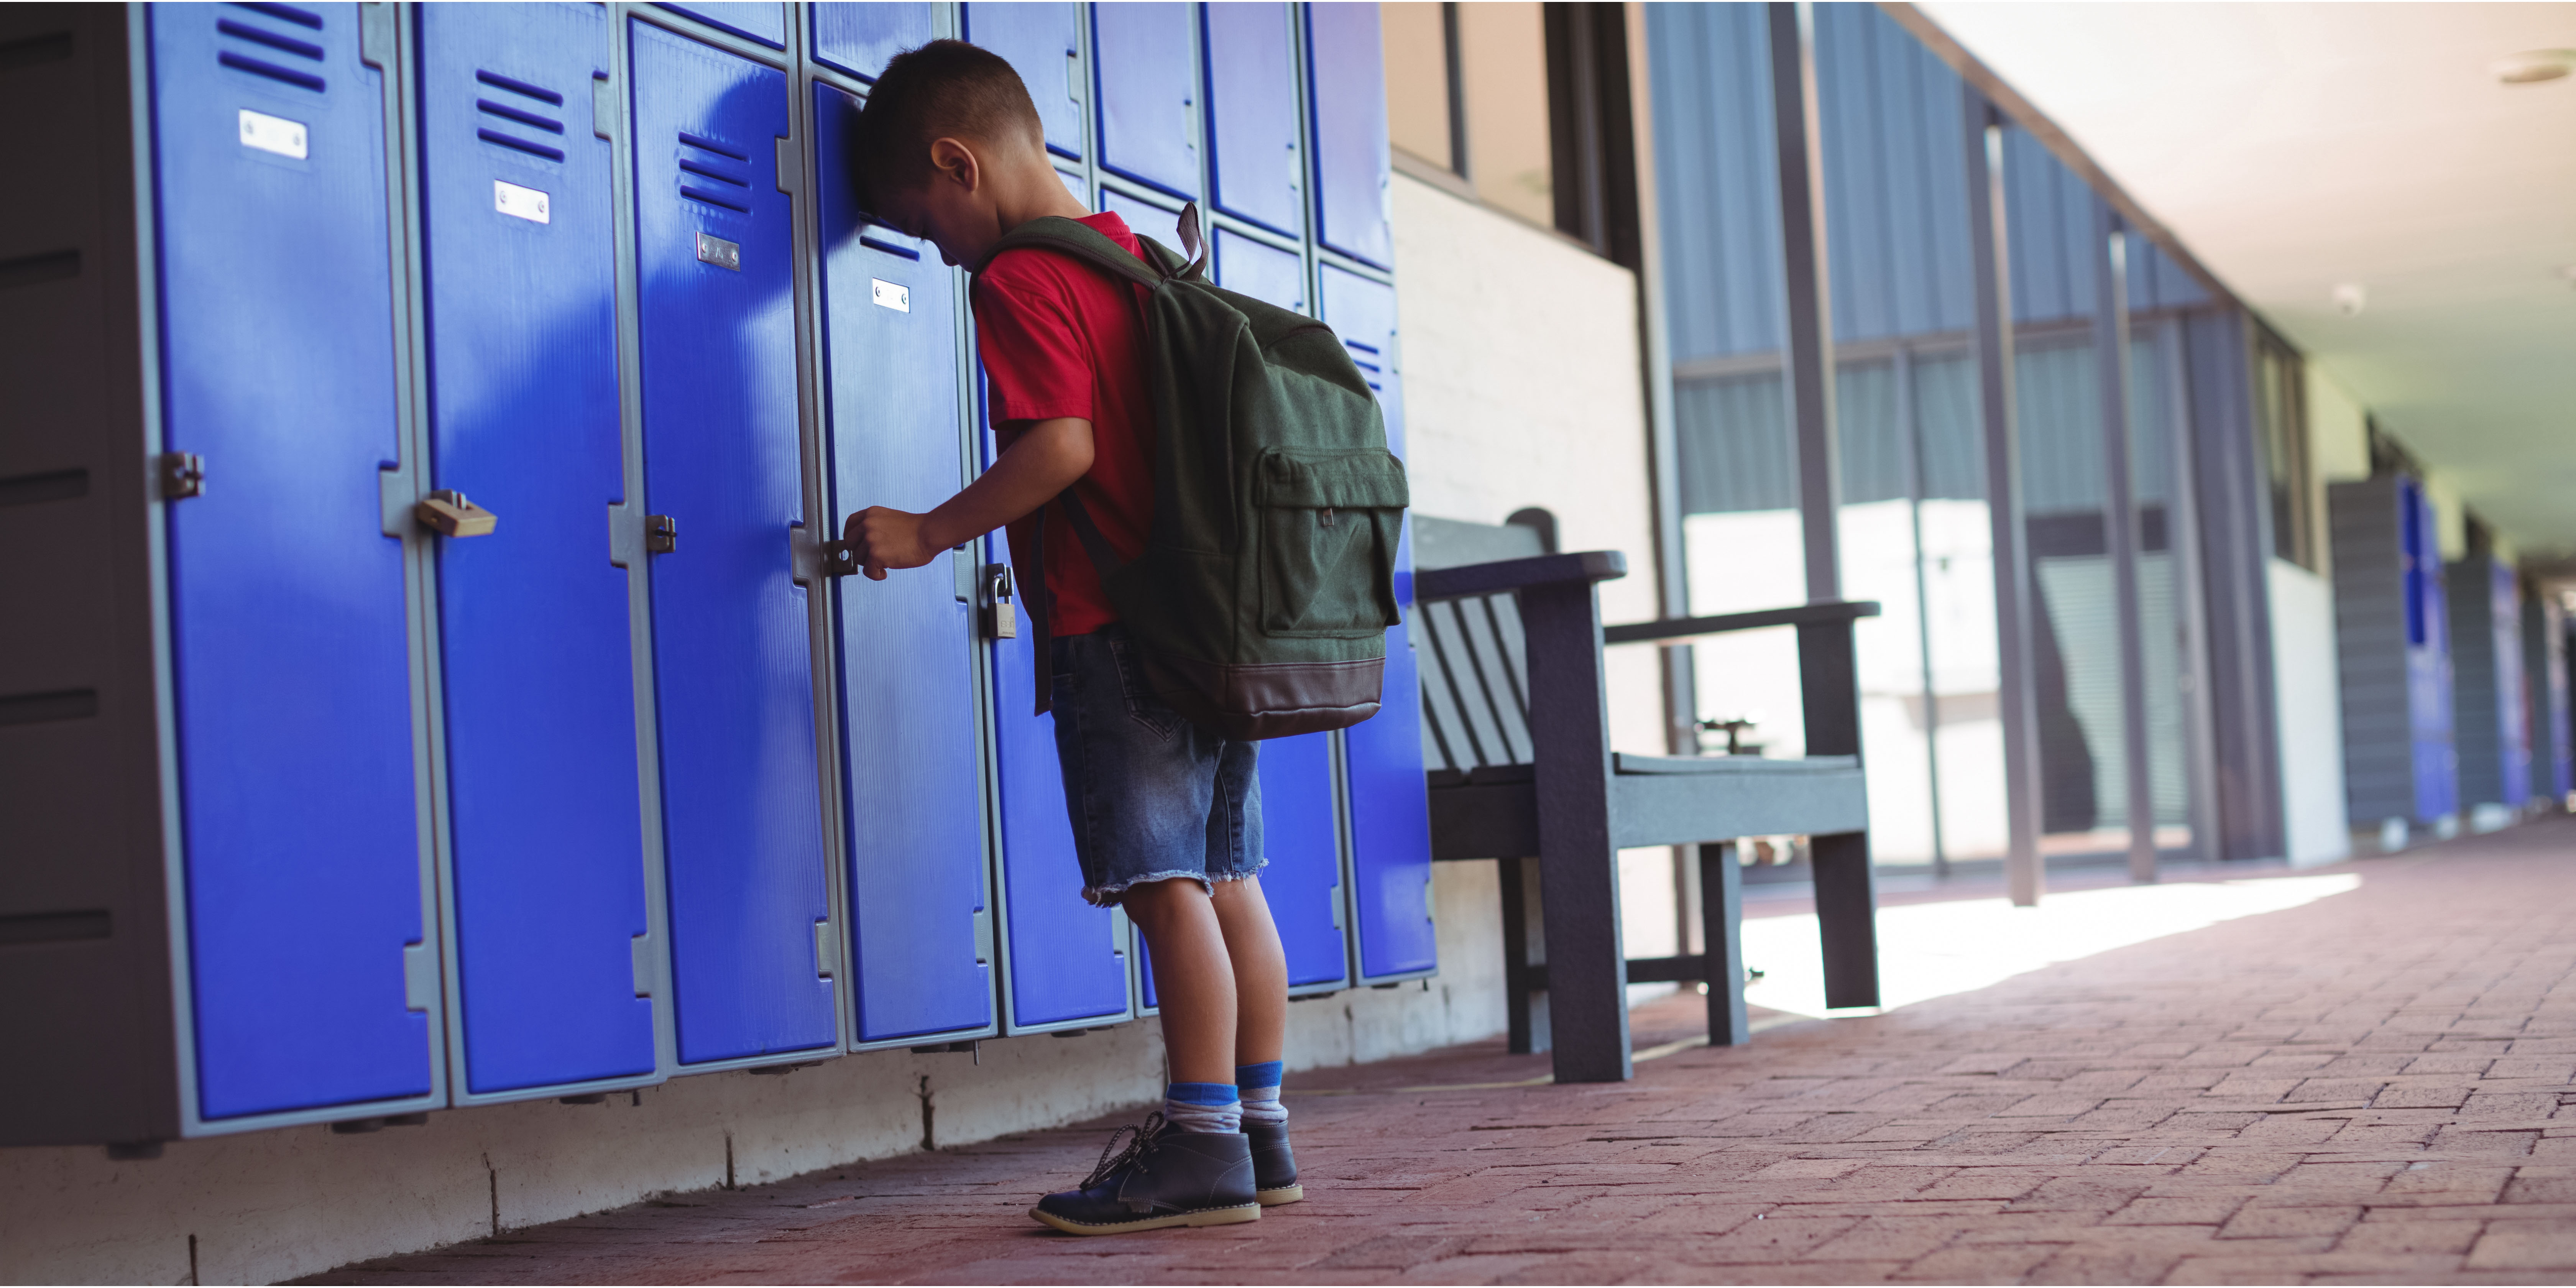 Sad boy leaning his head against the school locker | Source: Shutterstock